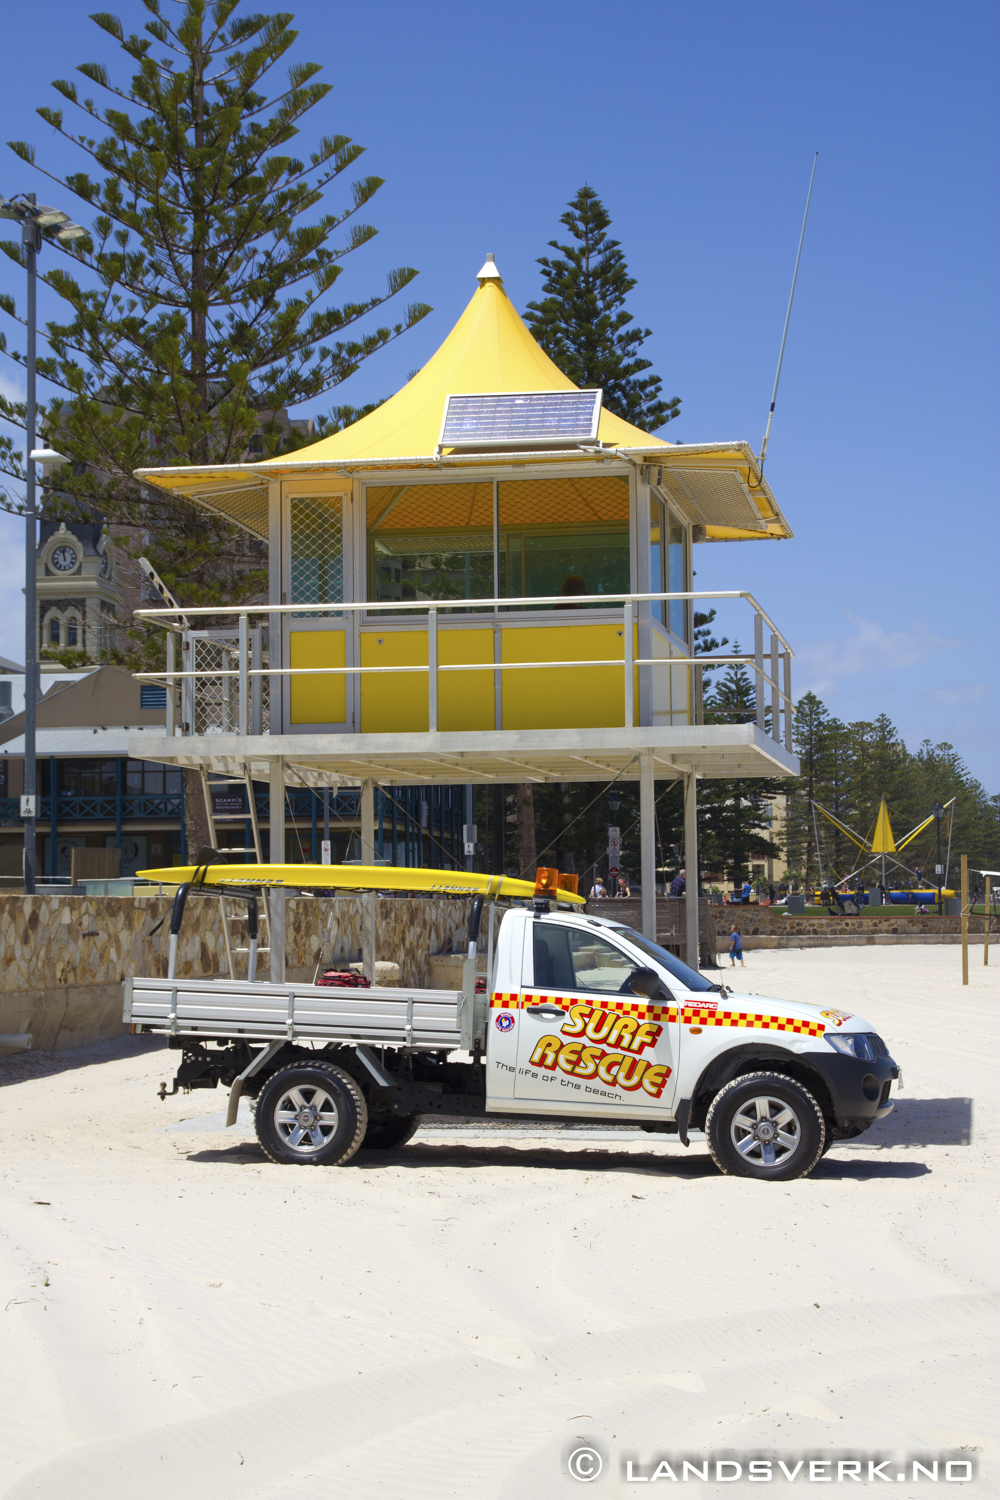 Glenelg Beach, Adelaide, South Australia. 

(Canon EOS 550D / Sigma 18-50mm F2.8)